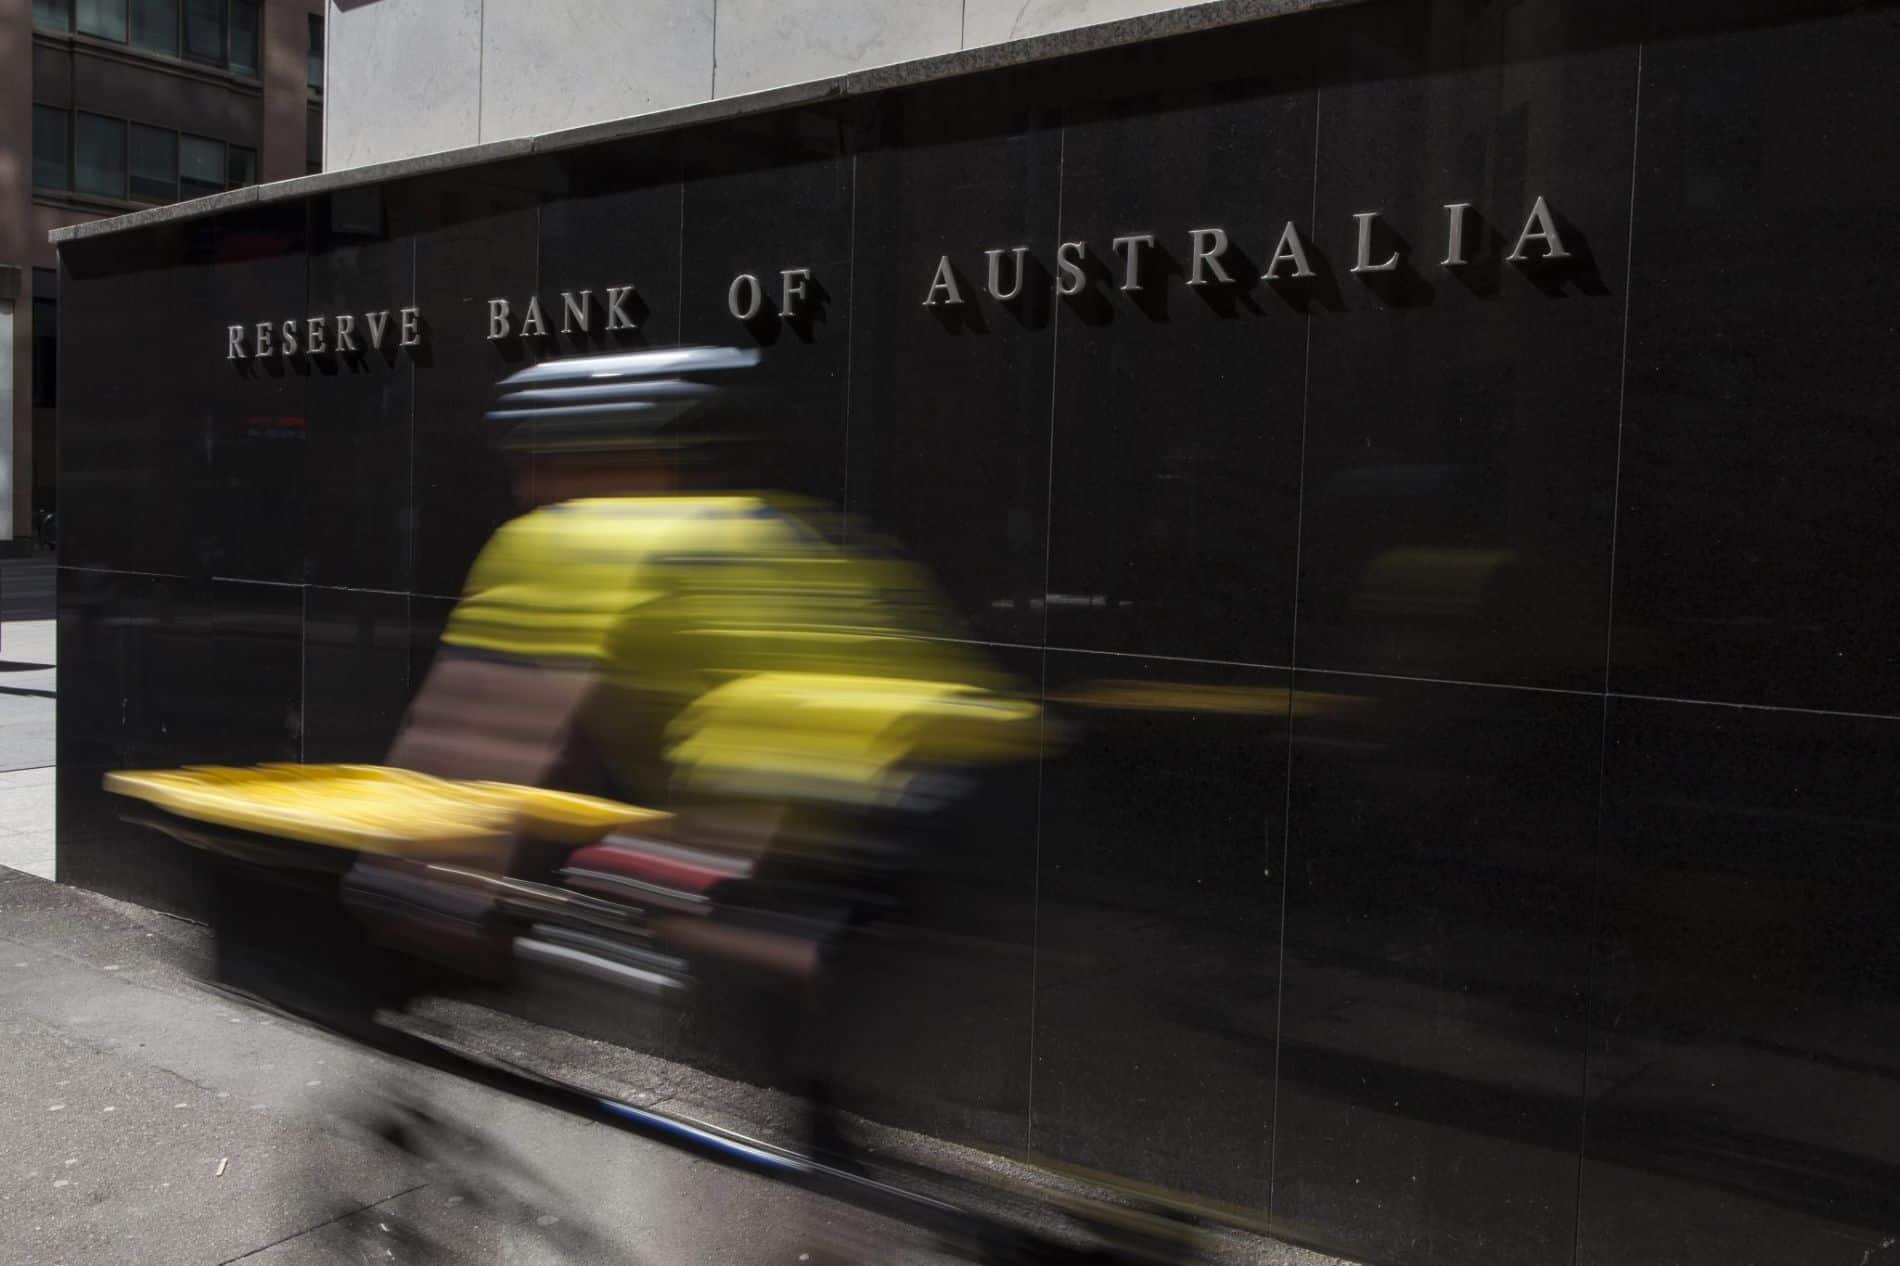 Reserve bank of australia sign